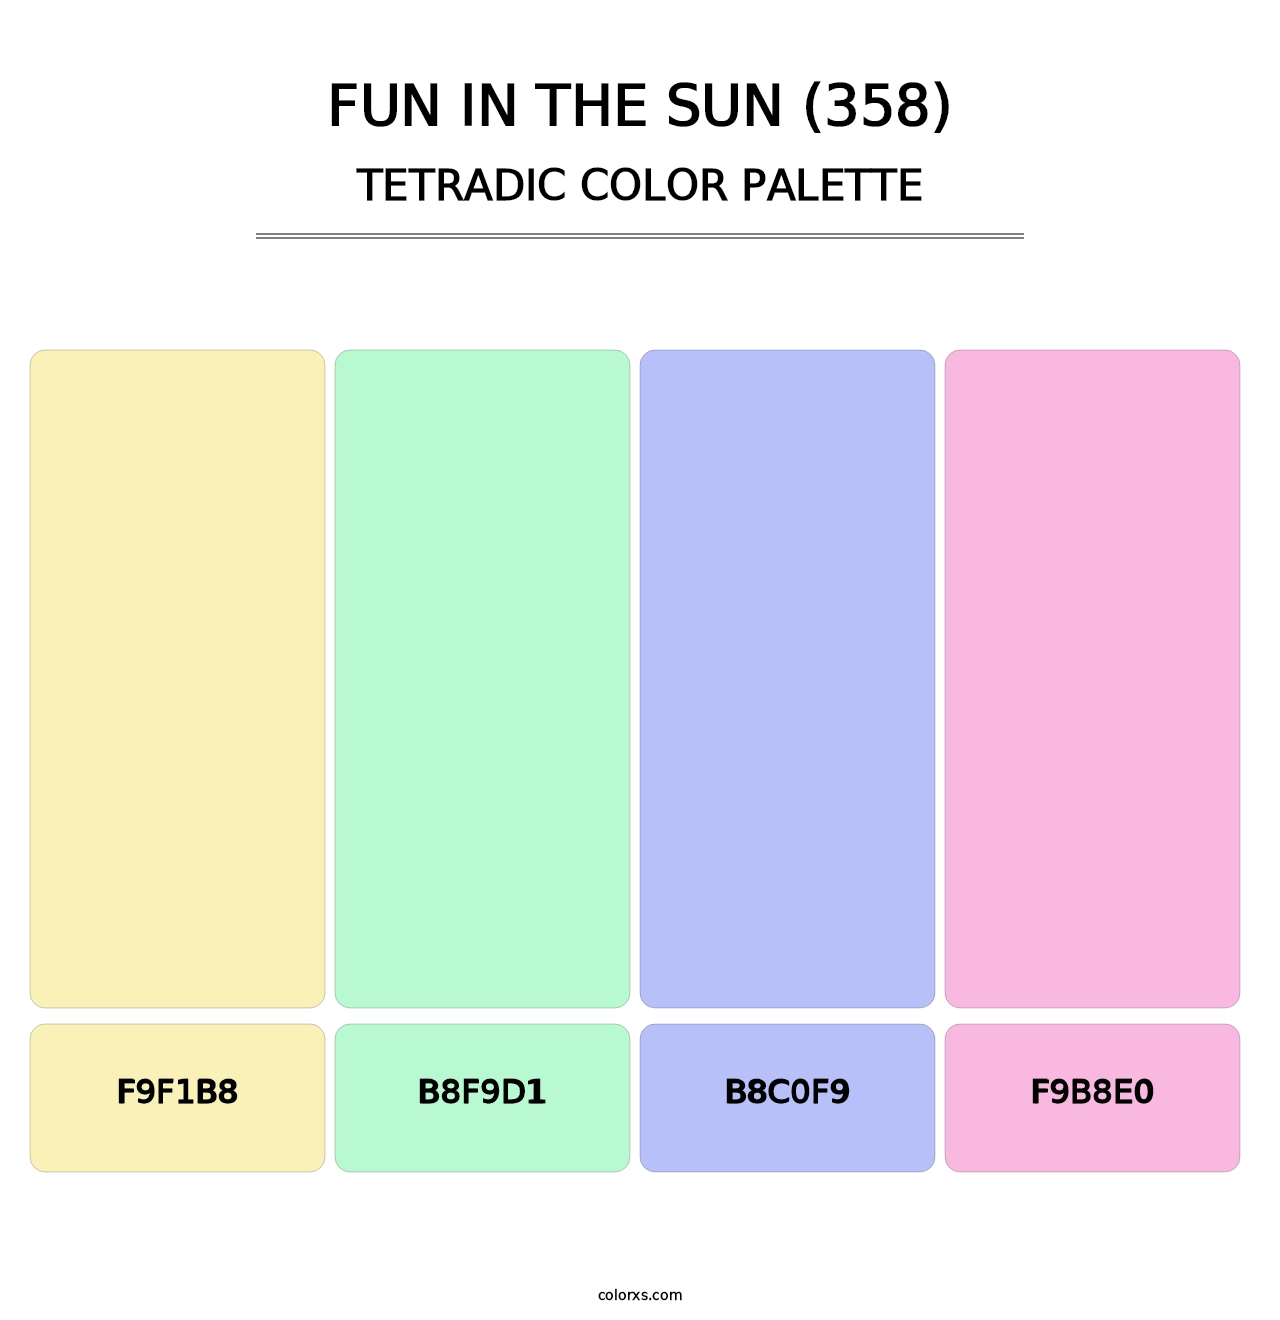 Fun in the Sun (358) - Tetradic Color Palette